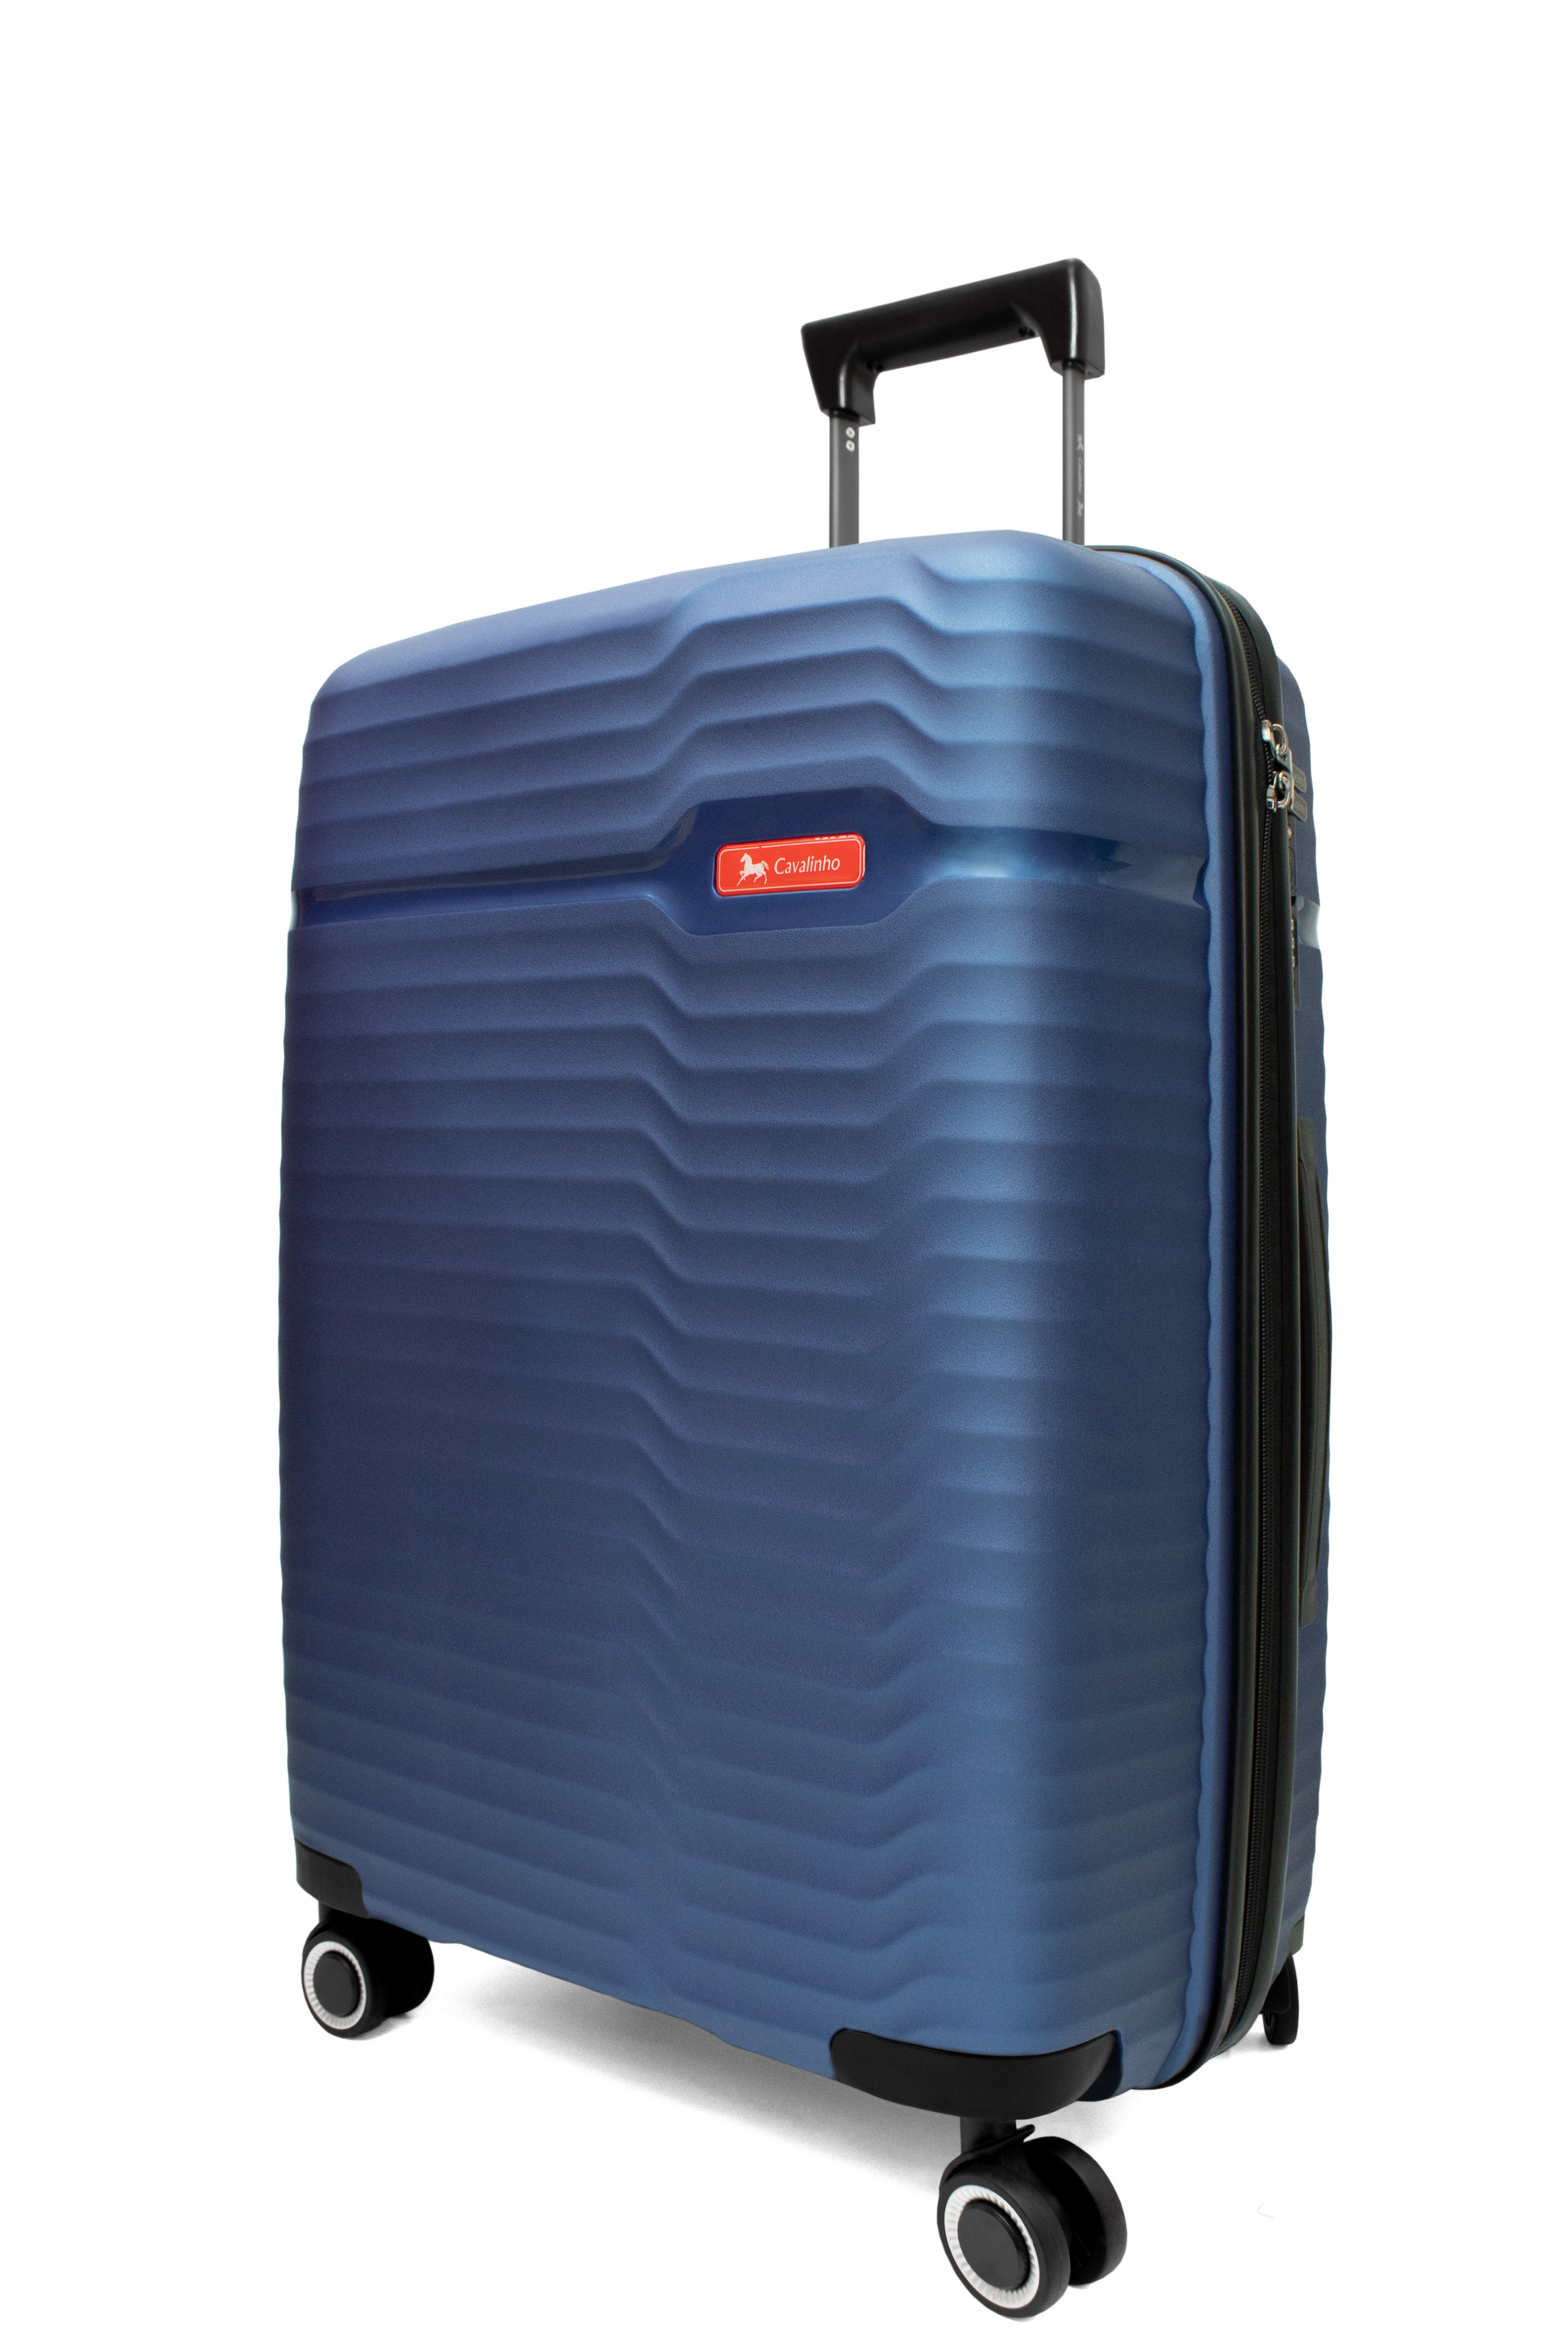 Cavalinho 3 Piece Hardside Luggage Set (14", 24" & 28") - 14 inch, 24 inch & 28 inch Set SteelBlue - 68010003.03.24_2S_e4dbe2b1-d903-453c-adc8-e7bacb21e1cf